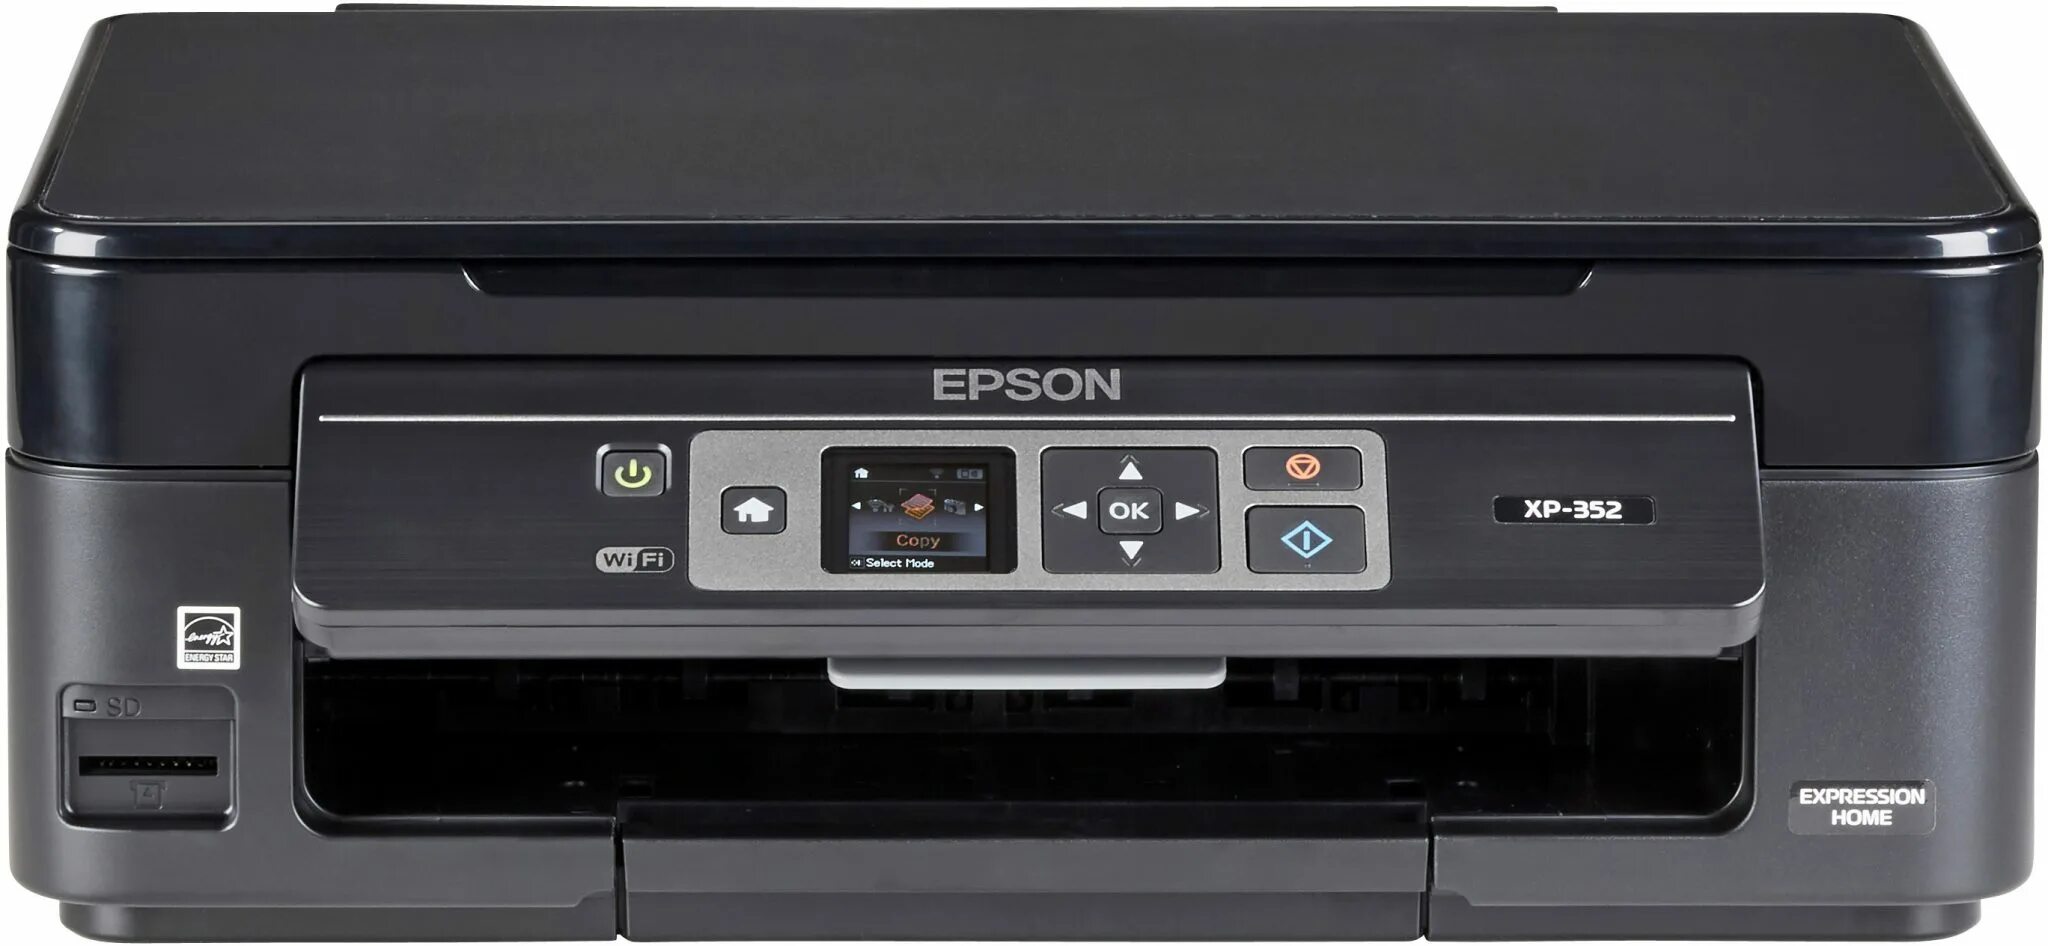 Хр 342. Epson XP-352. МФУ Epson XP 352. Принтер Эпсон хр 342. Epson XP 452.